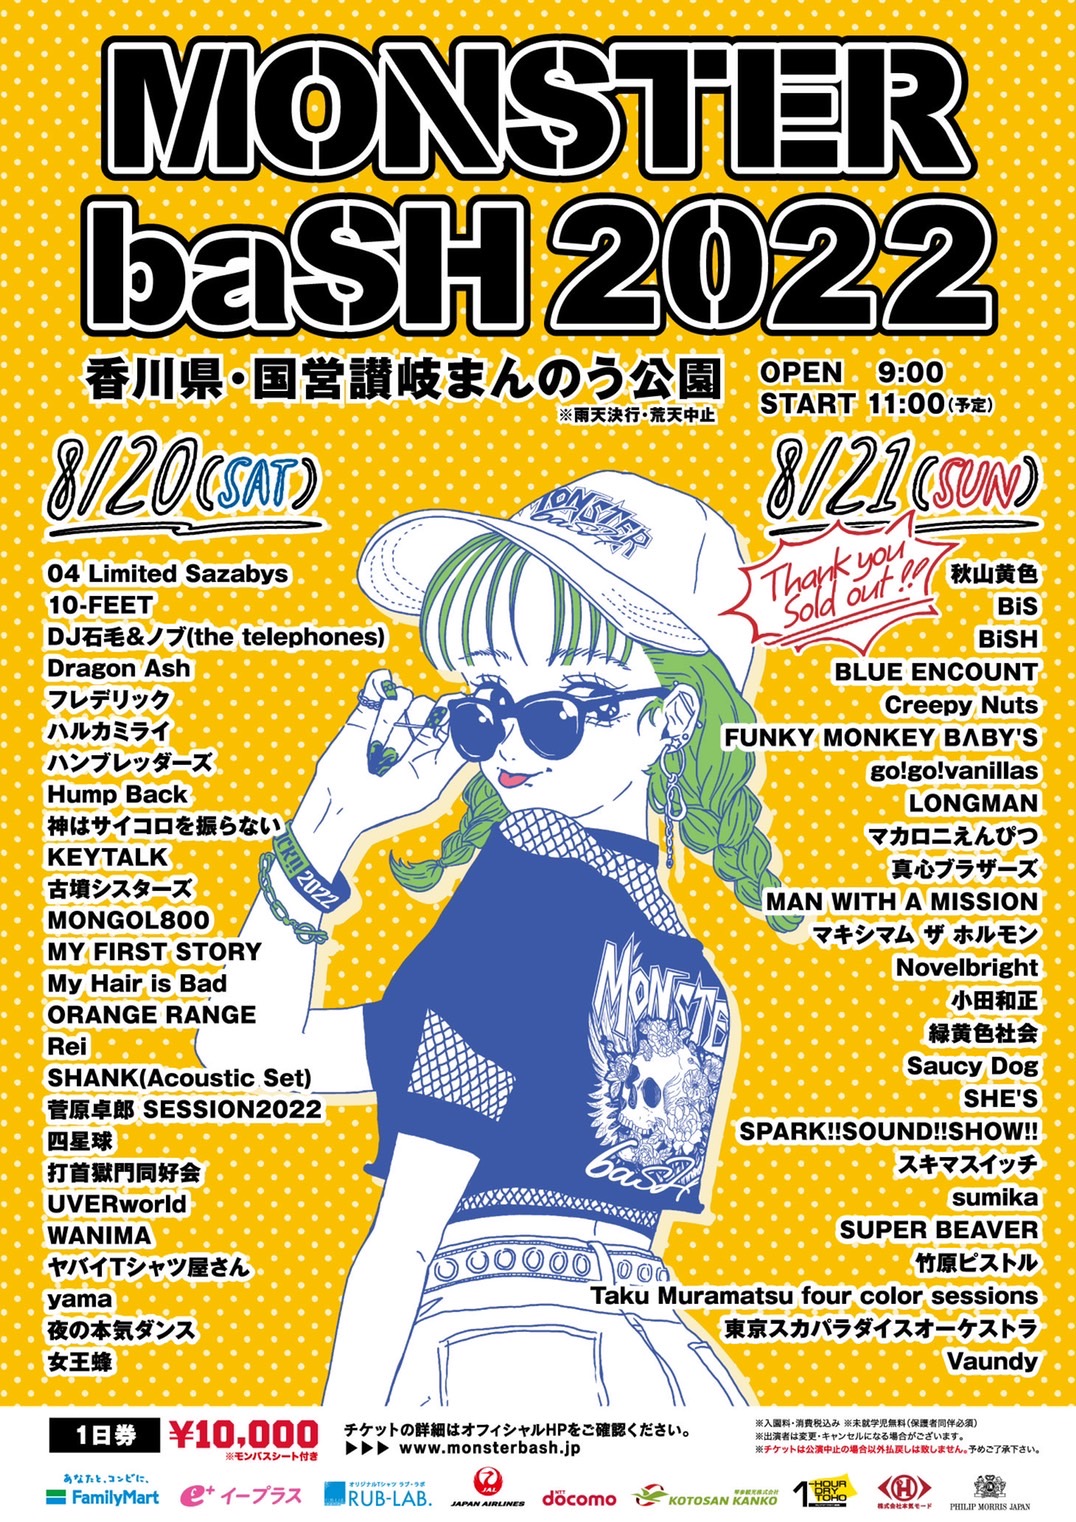 MONSTER baSH 2023 1日券 8月20日(日) 2枚 - 通販 - sge.com.br